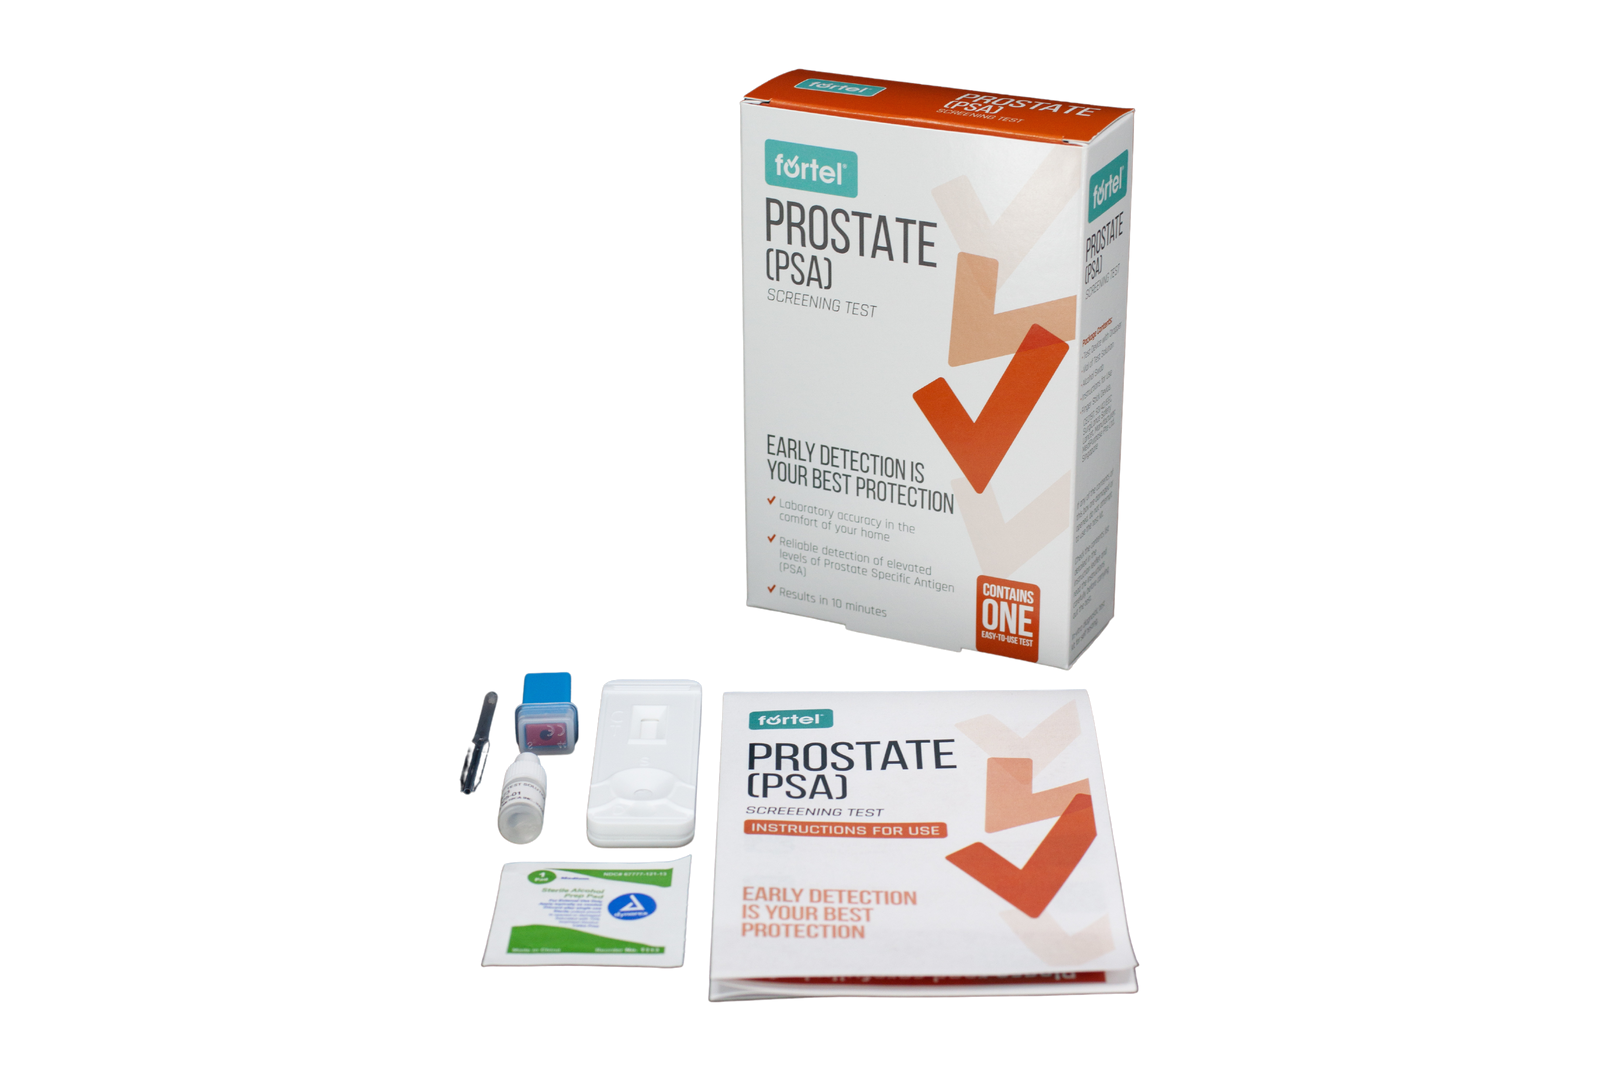 Free Prostate (PSA) Screening Test